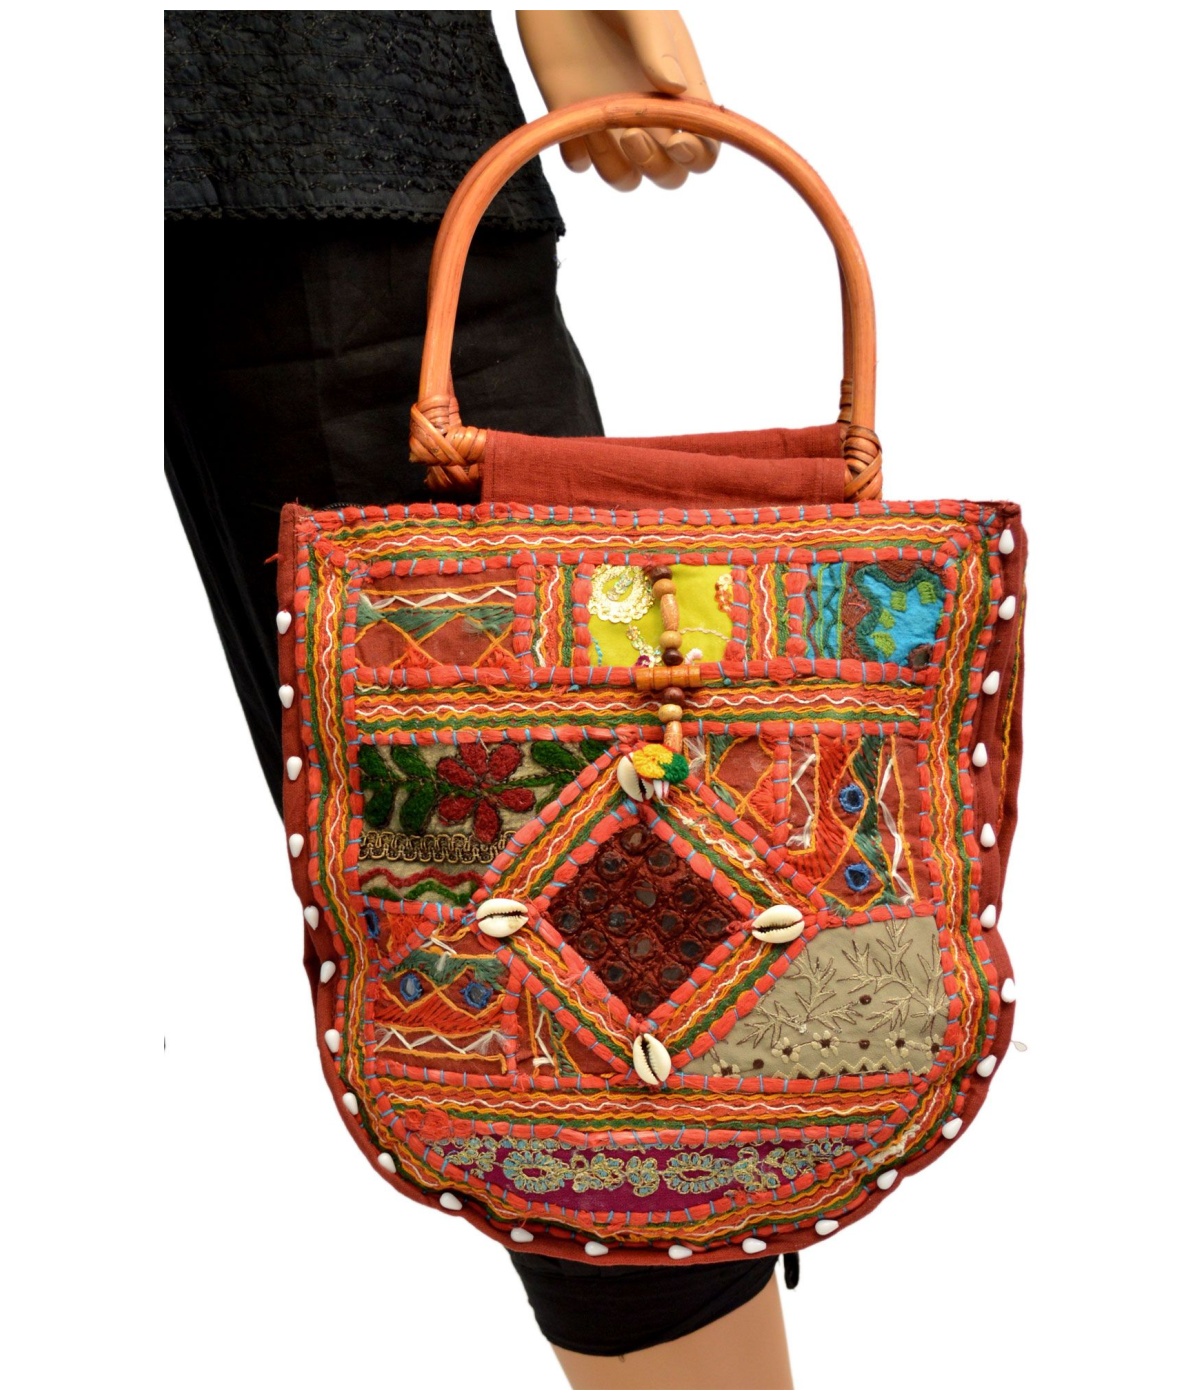 Rajasthani Shoulder Bag with Mirror Work - General Category